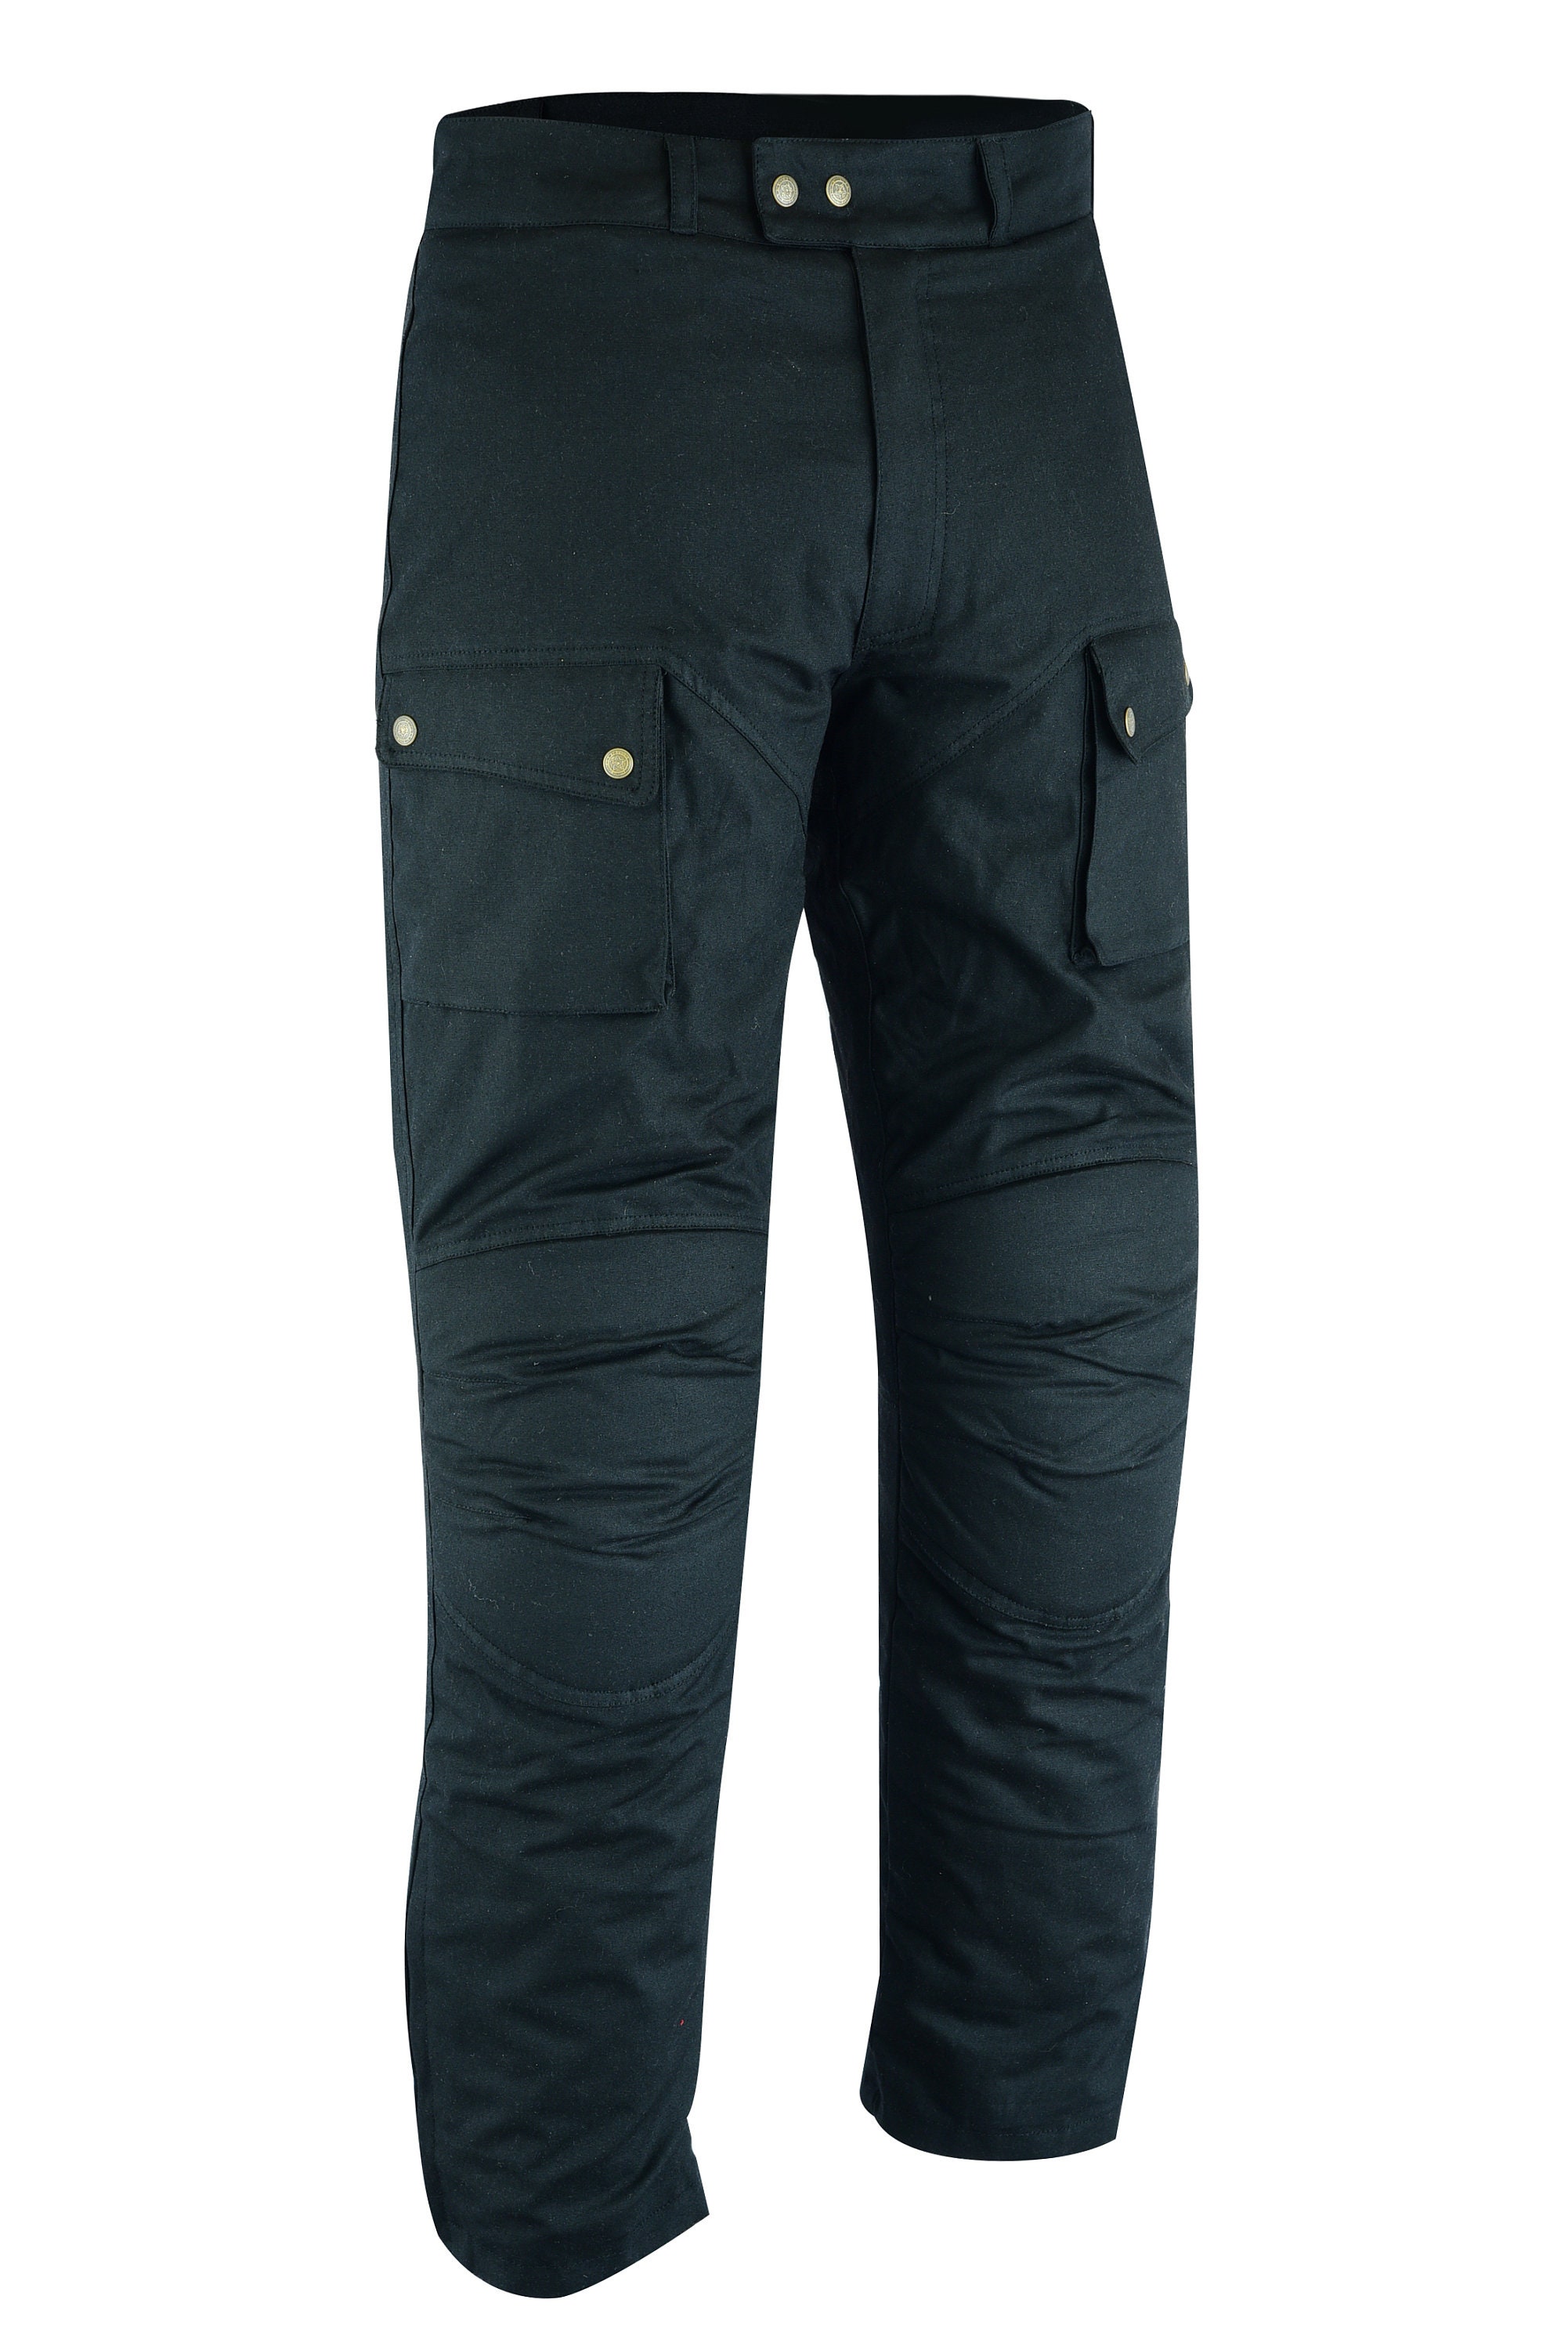 Mens Motorcycle Textile Trouser CE Armour Wind Waterproof Winter Pant Bargain UK